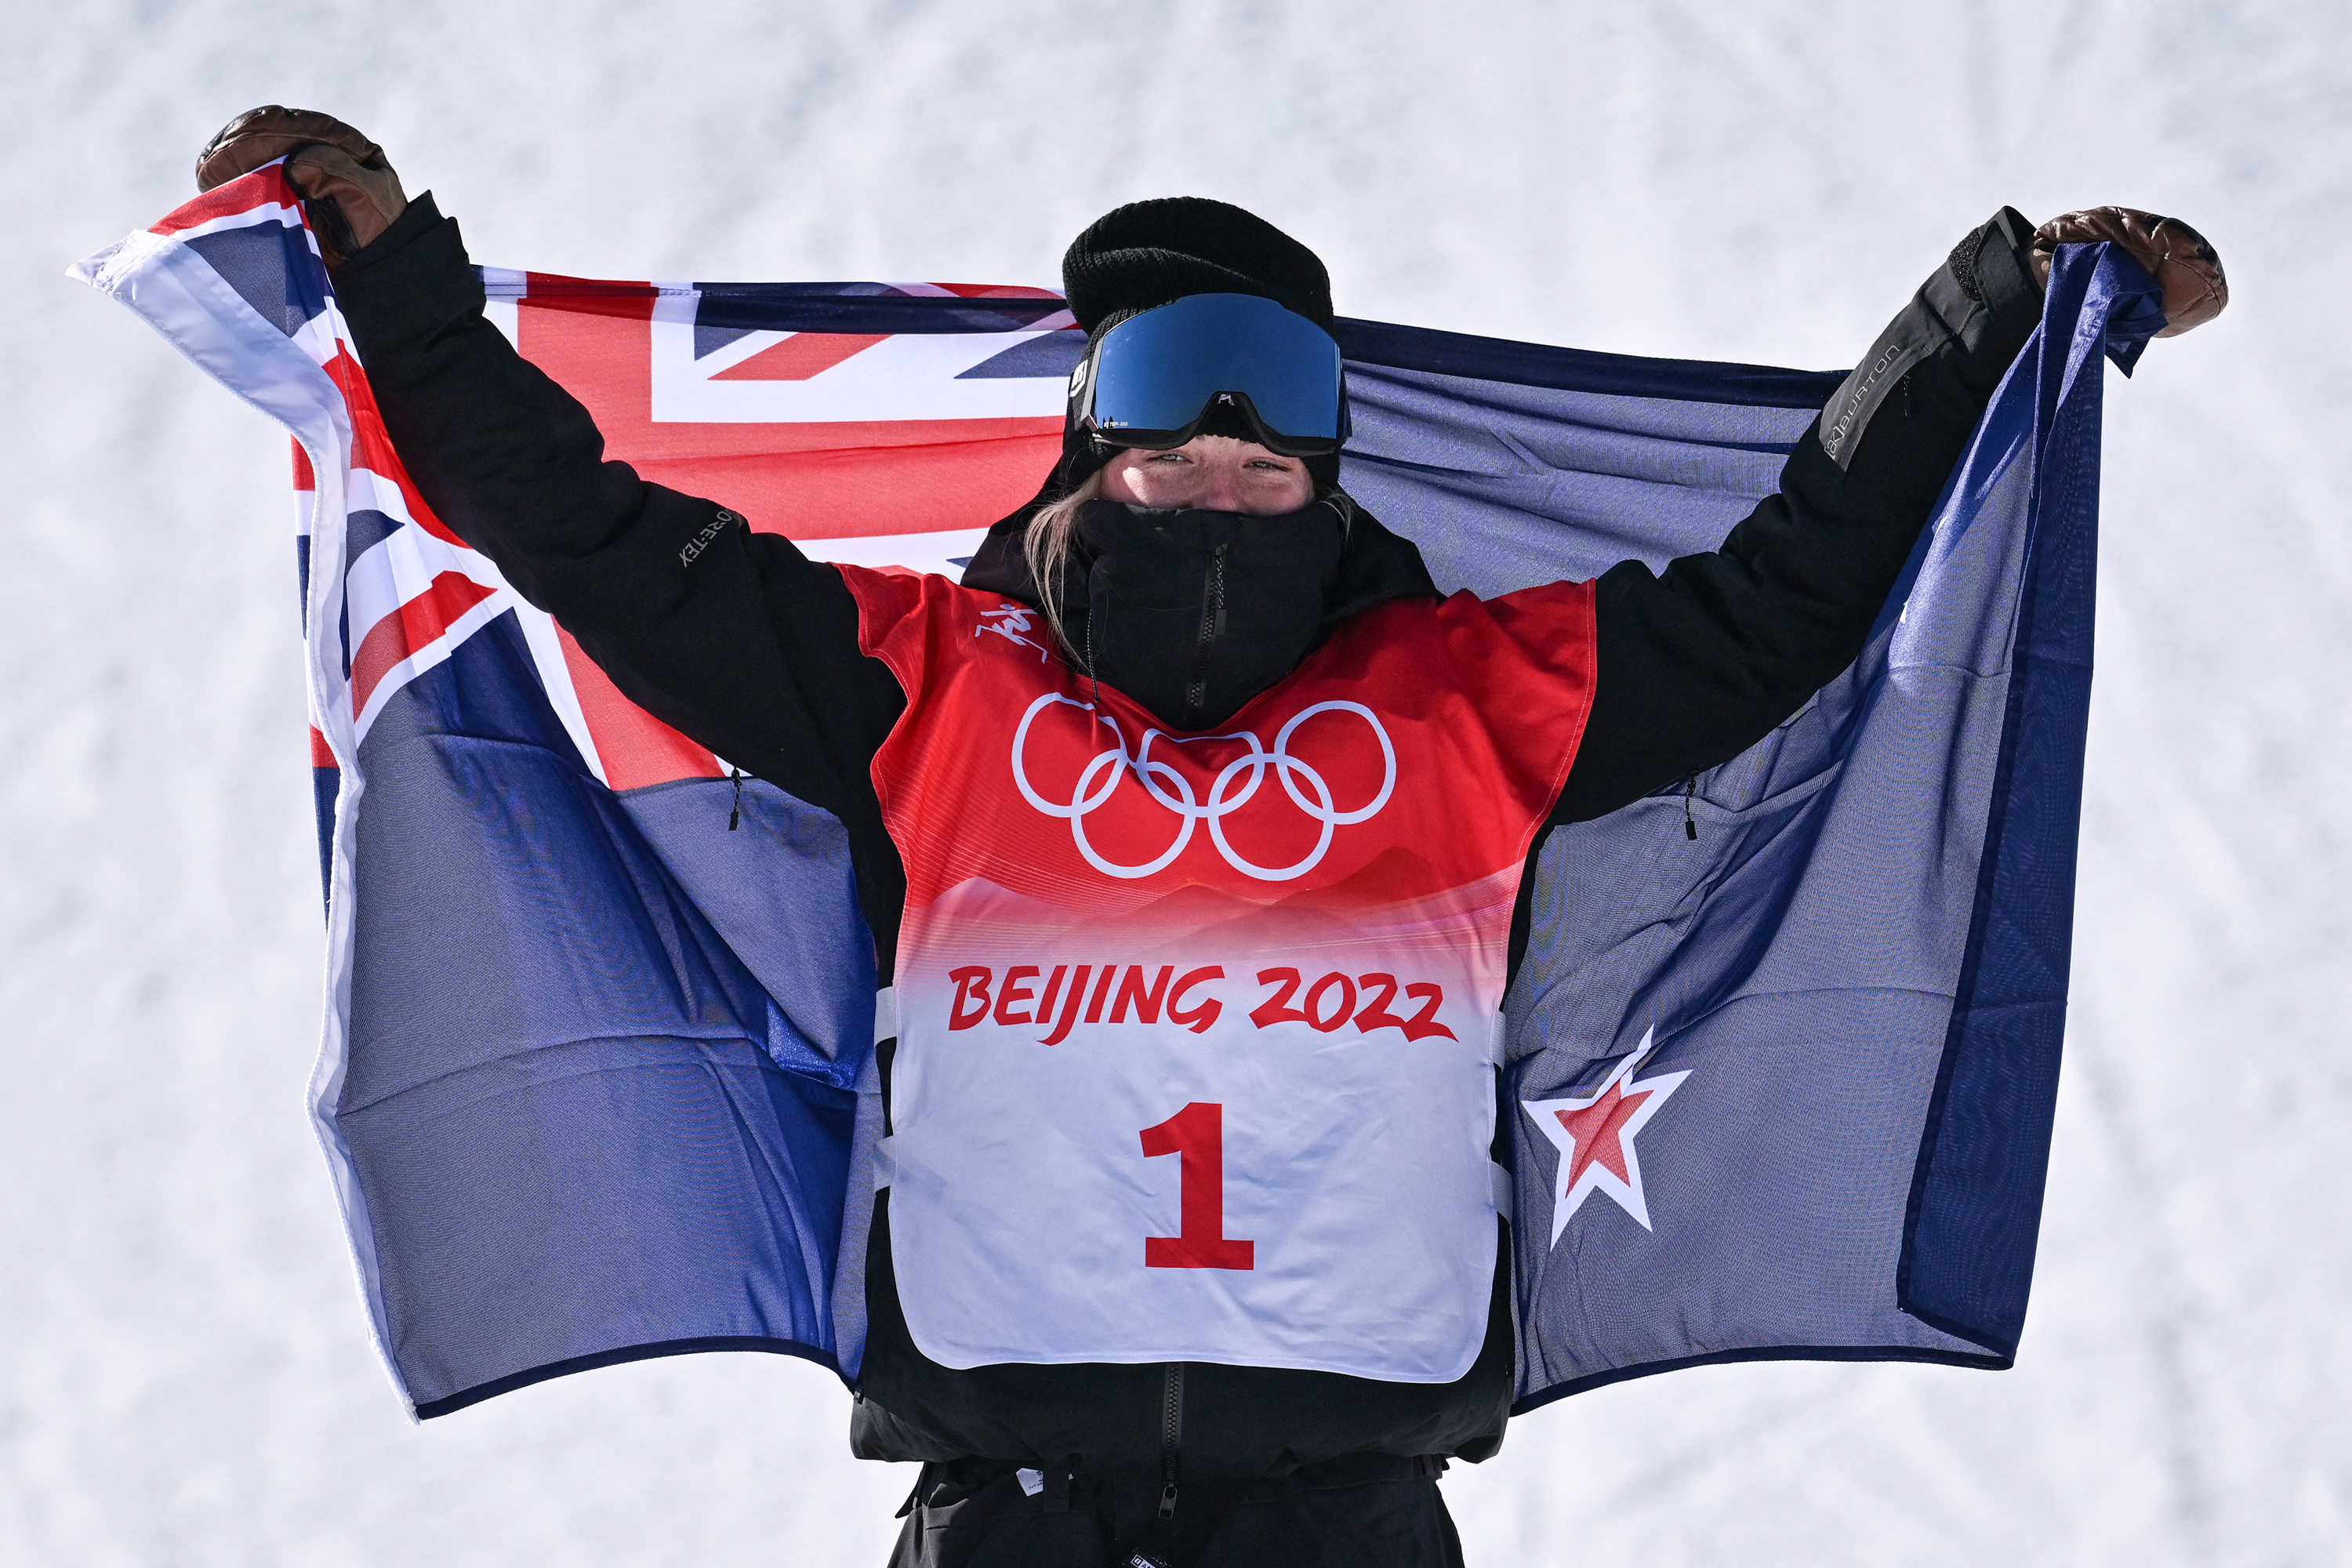 Zoi Sadowski-Synnott wins first ever Winter Olympics gold for New Zealand